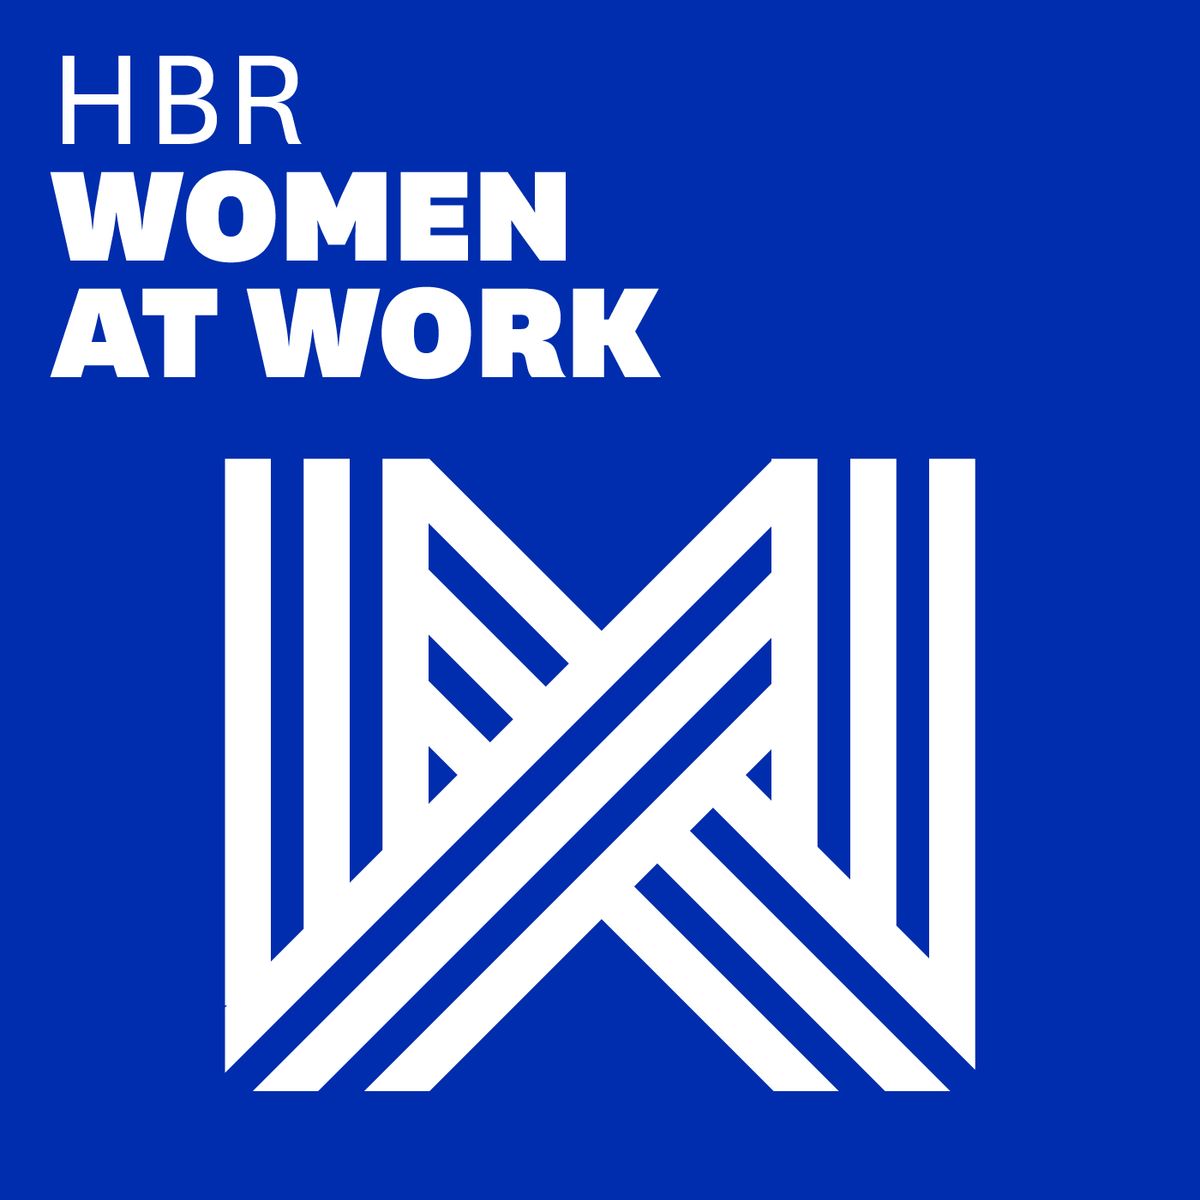 HBR naised tööl